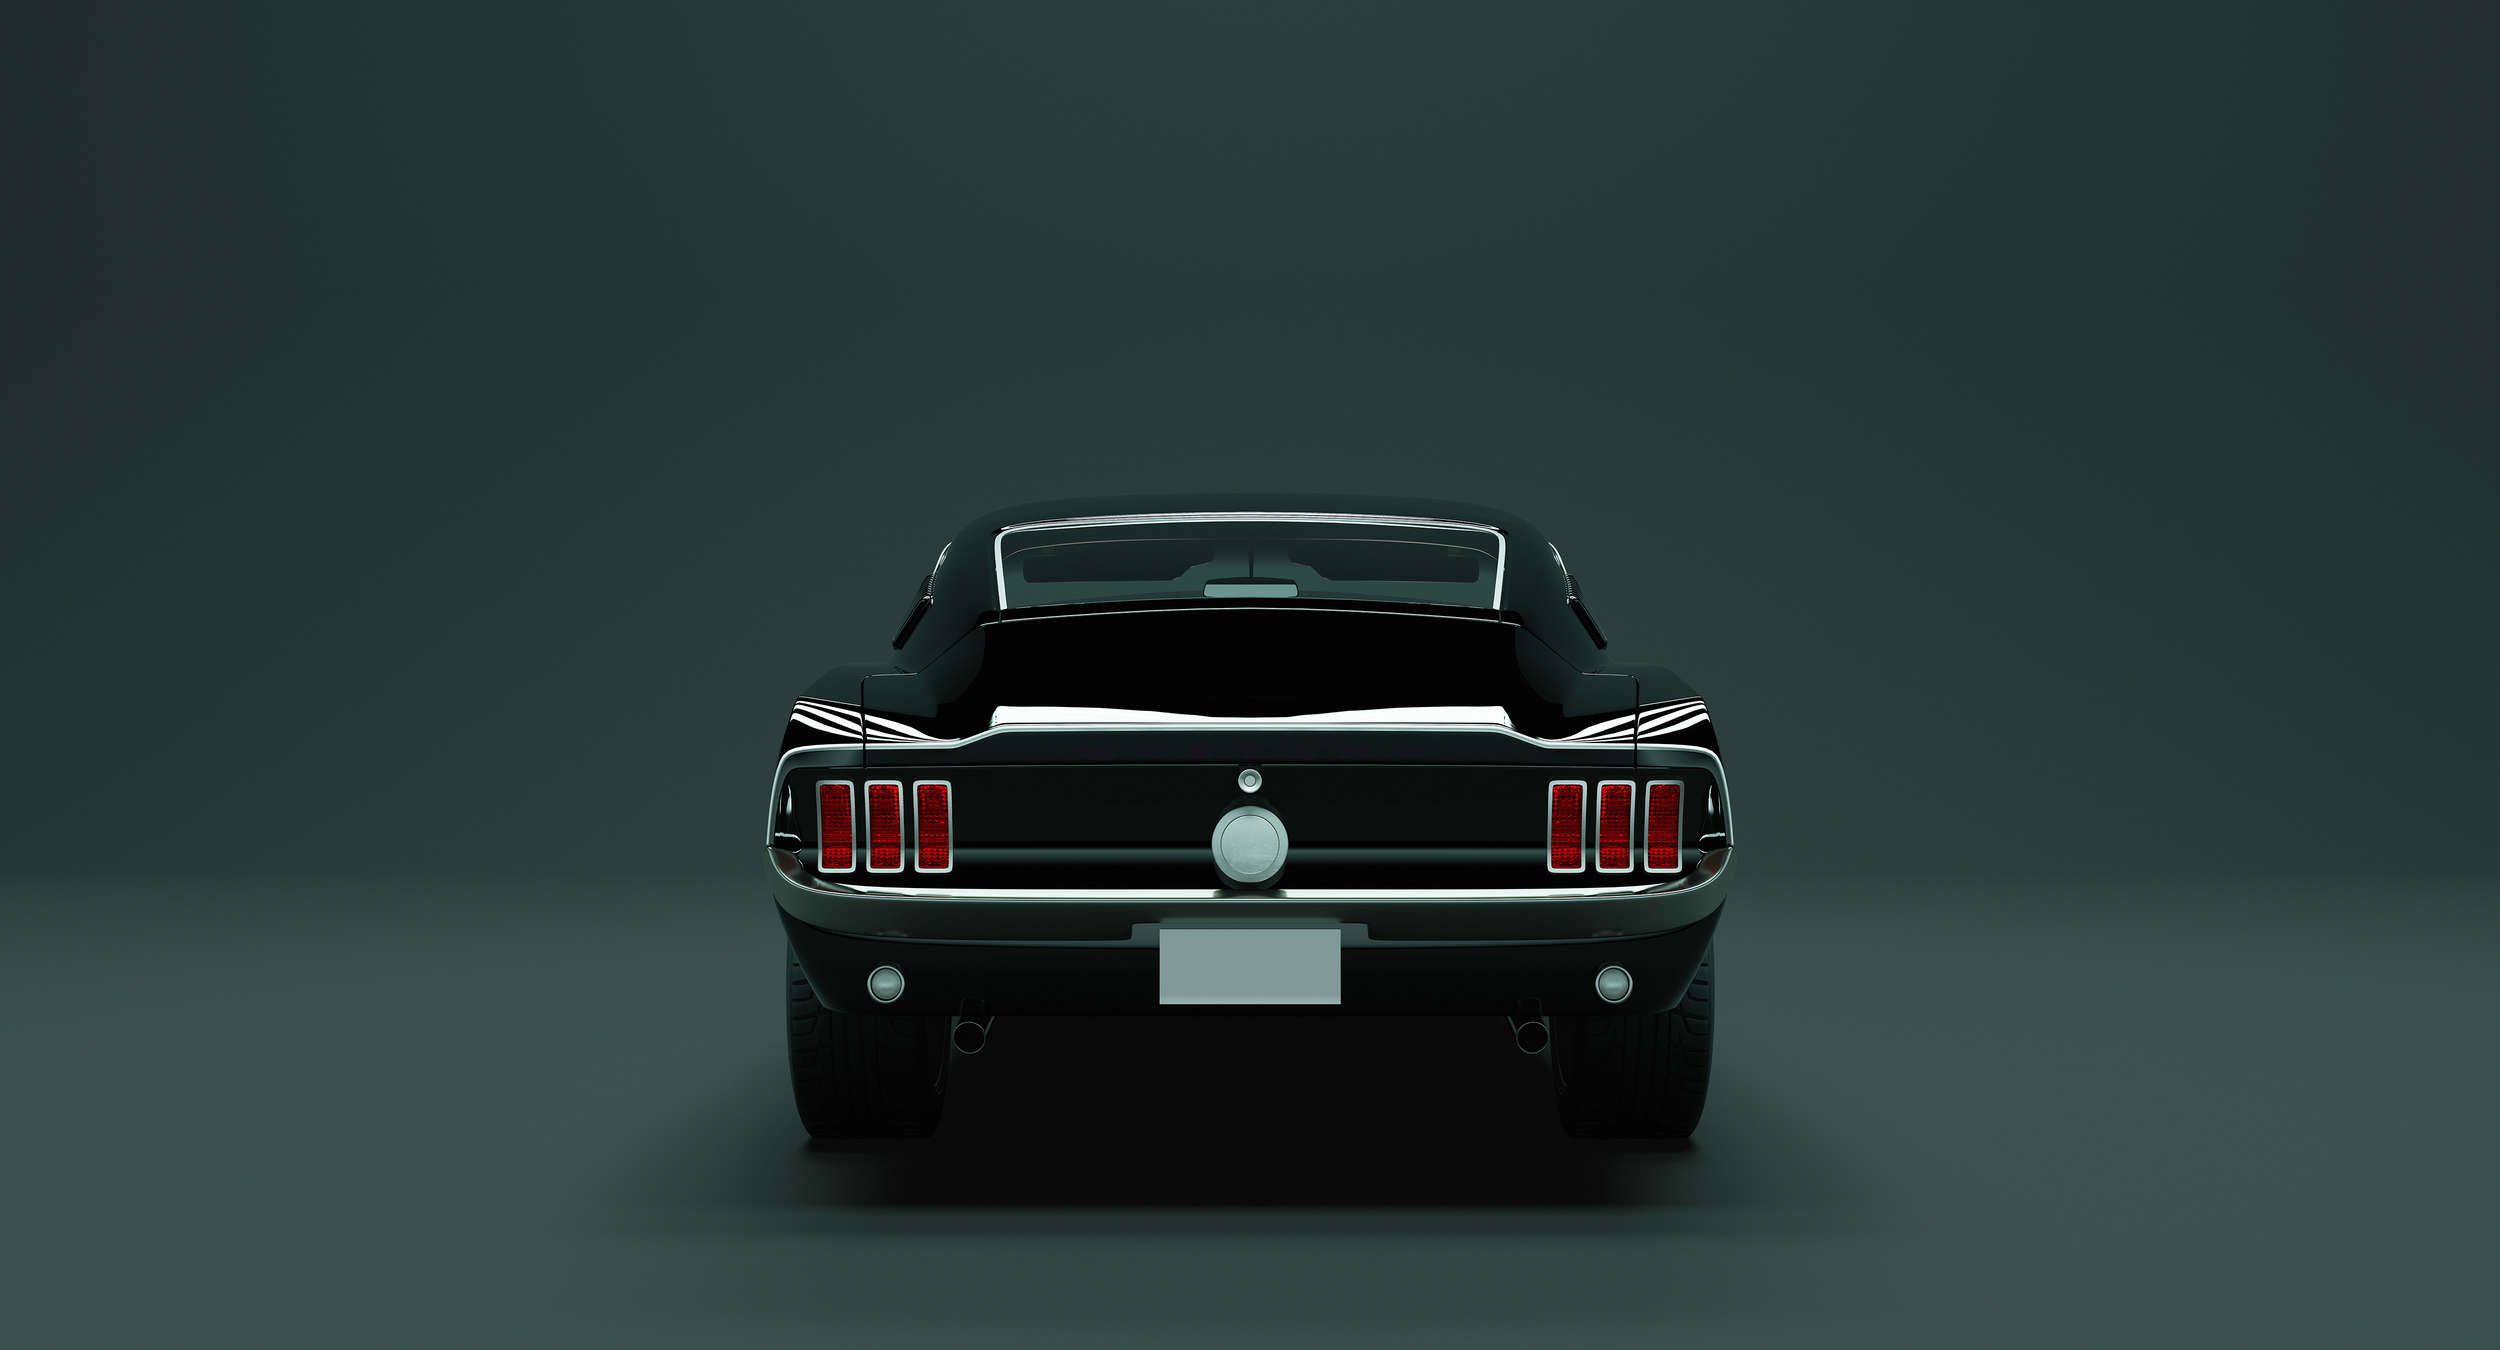             Mustang 3 - American Muscle Car Wallpaper - Blue, Black | Matt Smooth Non-woven
        